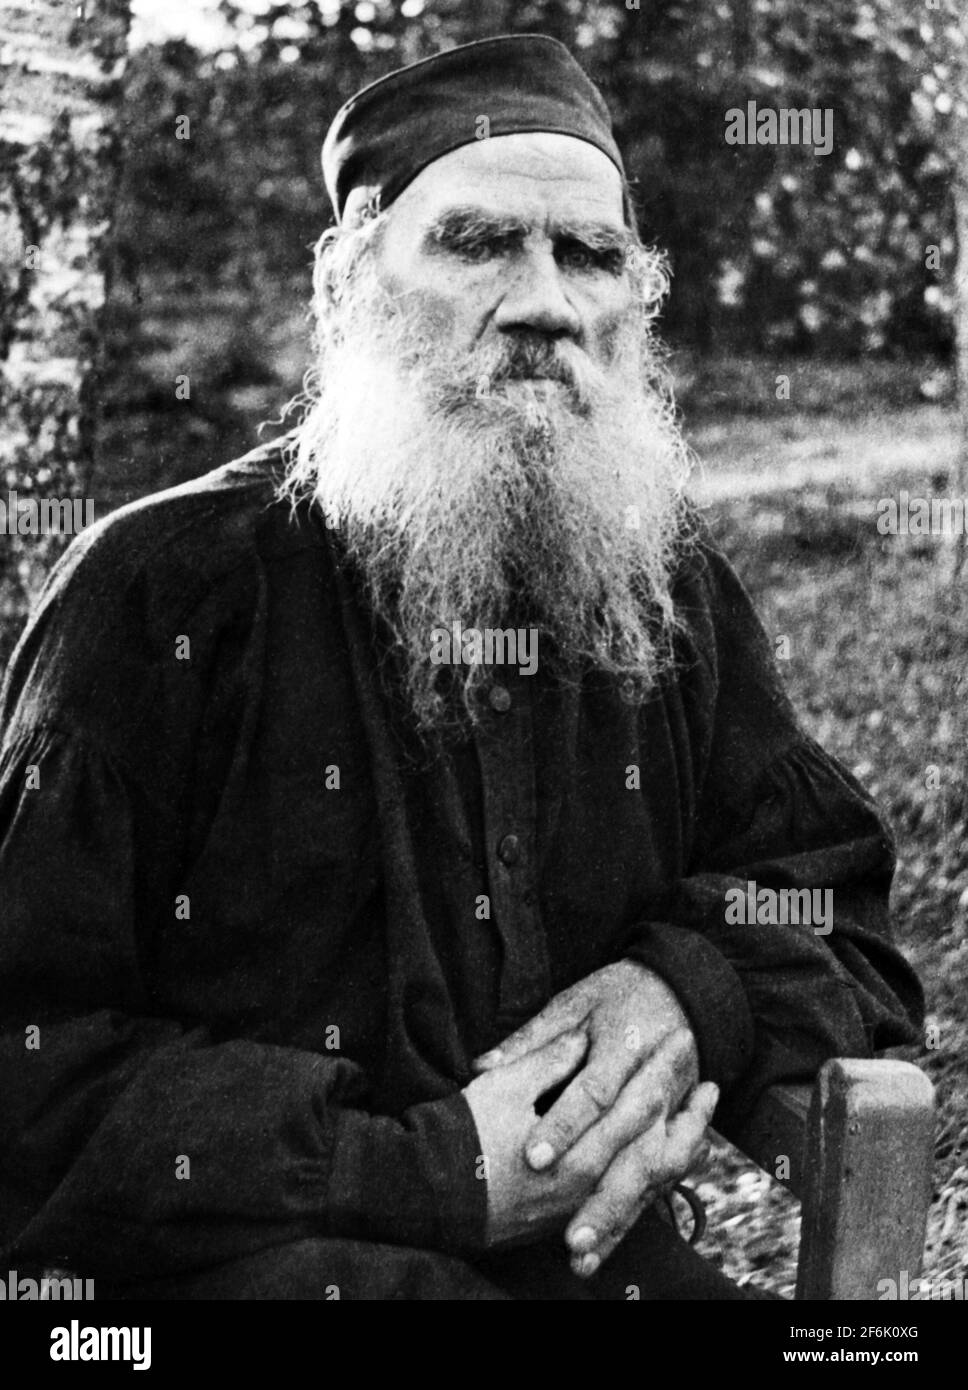 Vintage portrait photo of Russian writer Leo Tolstoy (1828 – 1910) – author of War and Peace + Anna Karenina. Photo circa 1897. Stock Photo